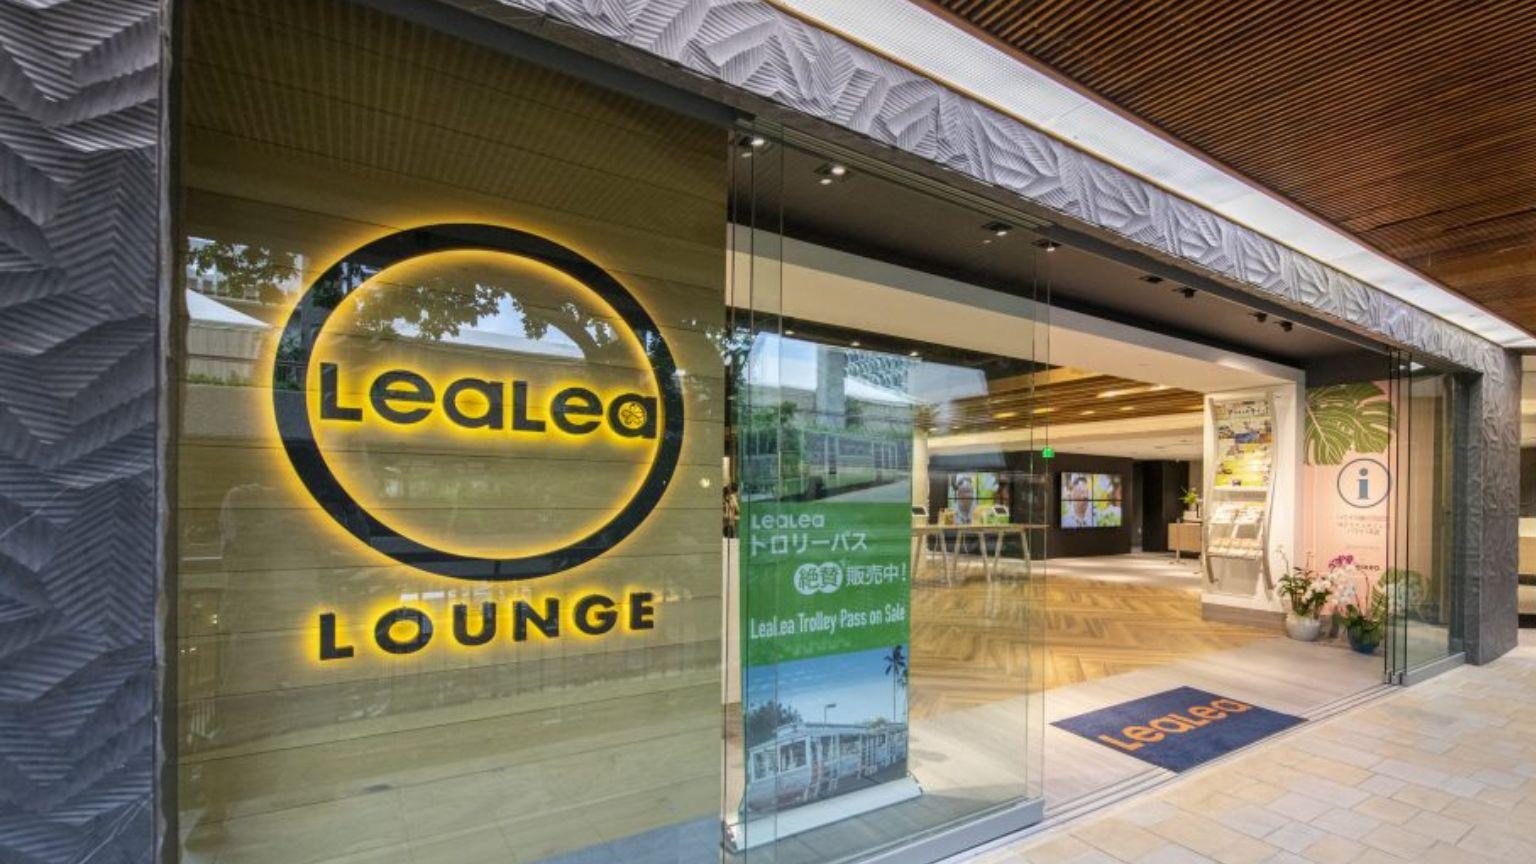 Lea Lea Lounge Honolulu, Terminal 2